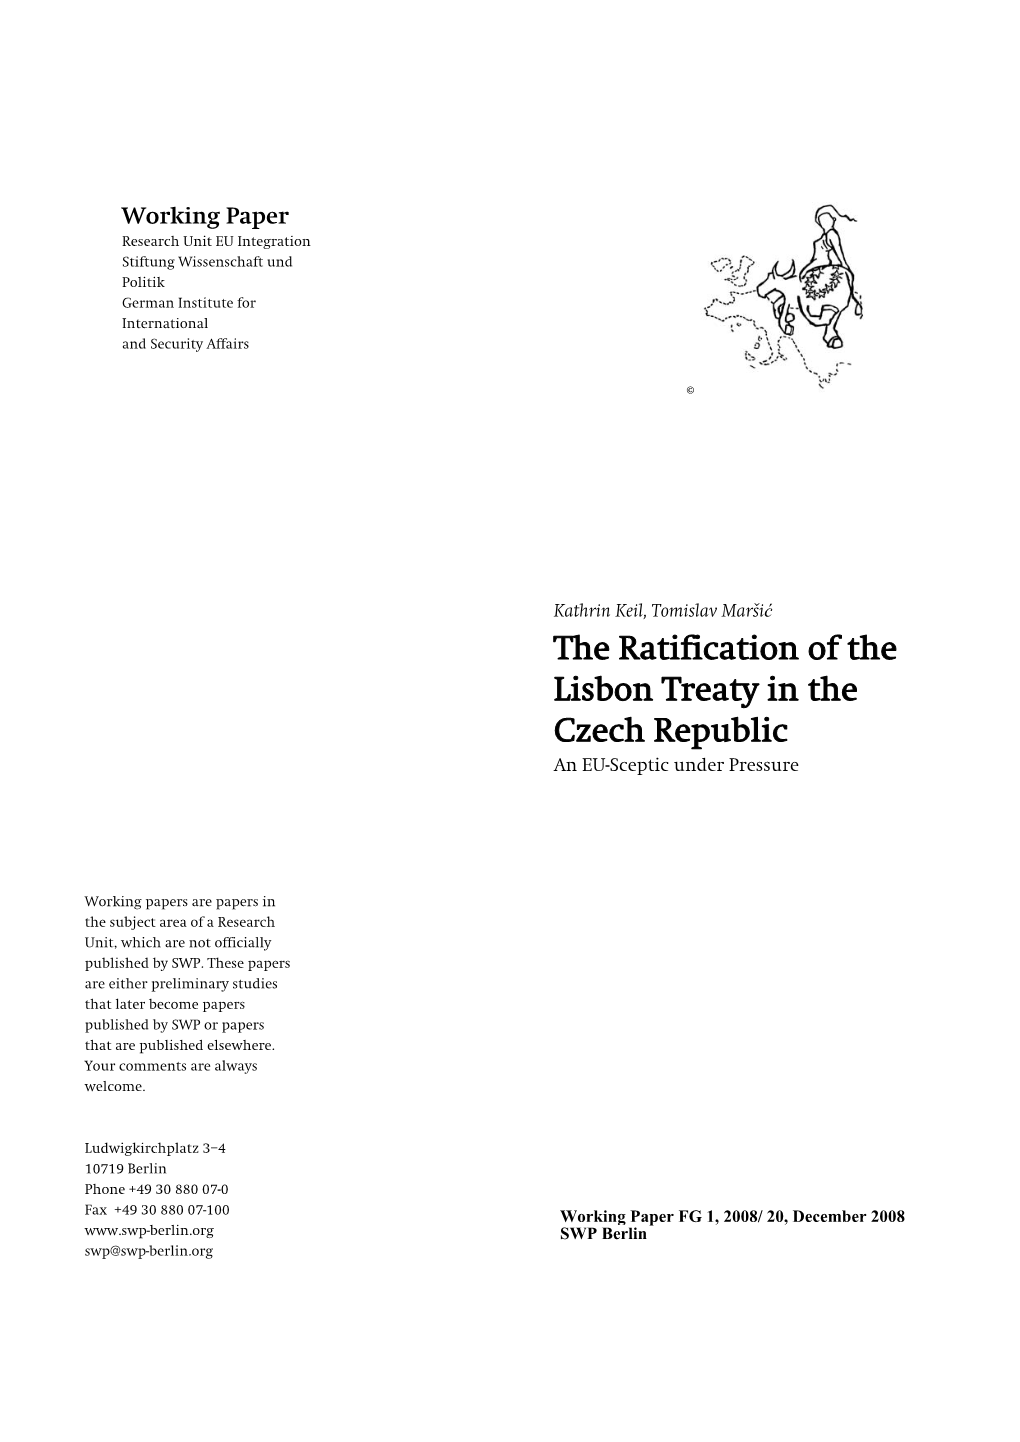 The Ratification of the Lisbon Treaty in the Czech Republic